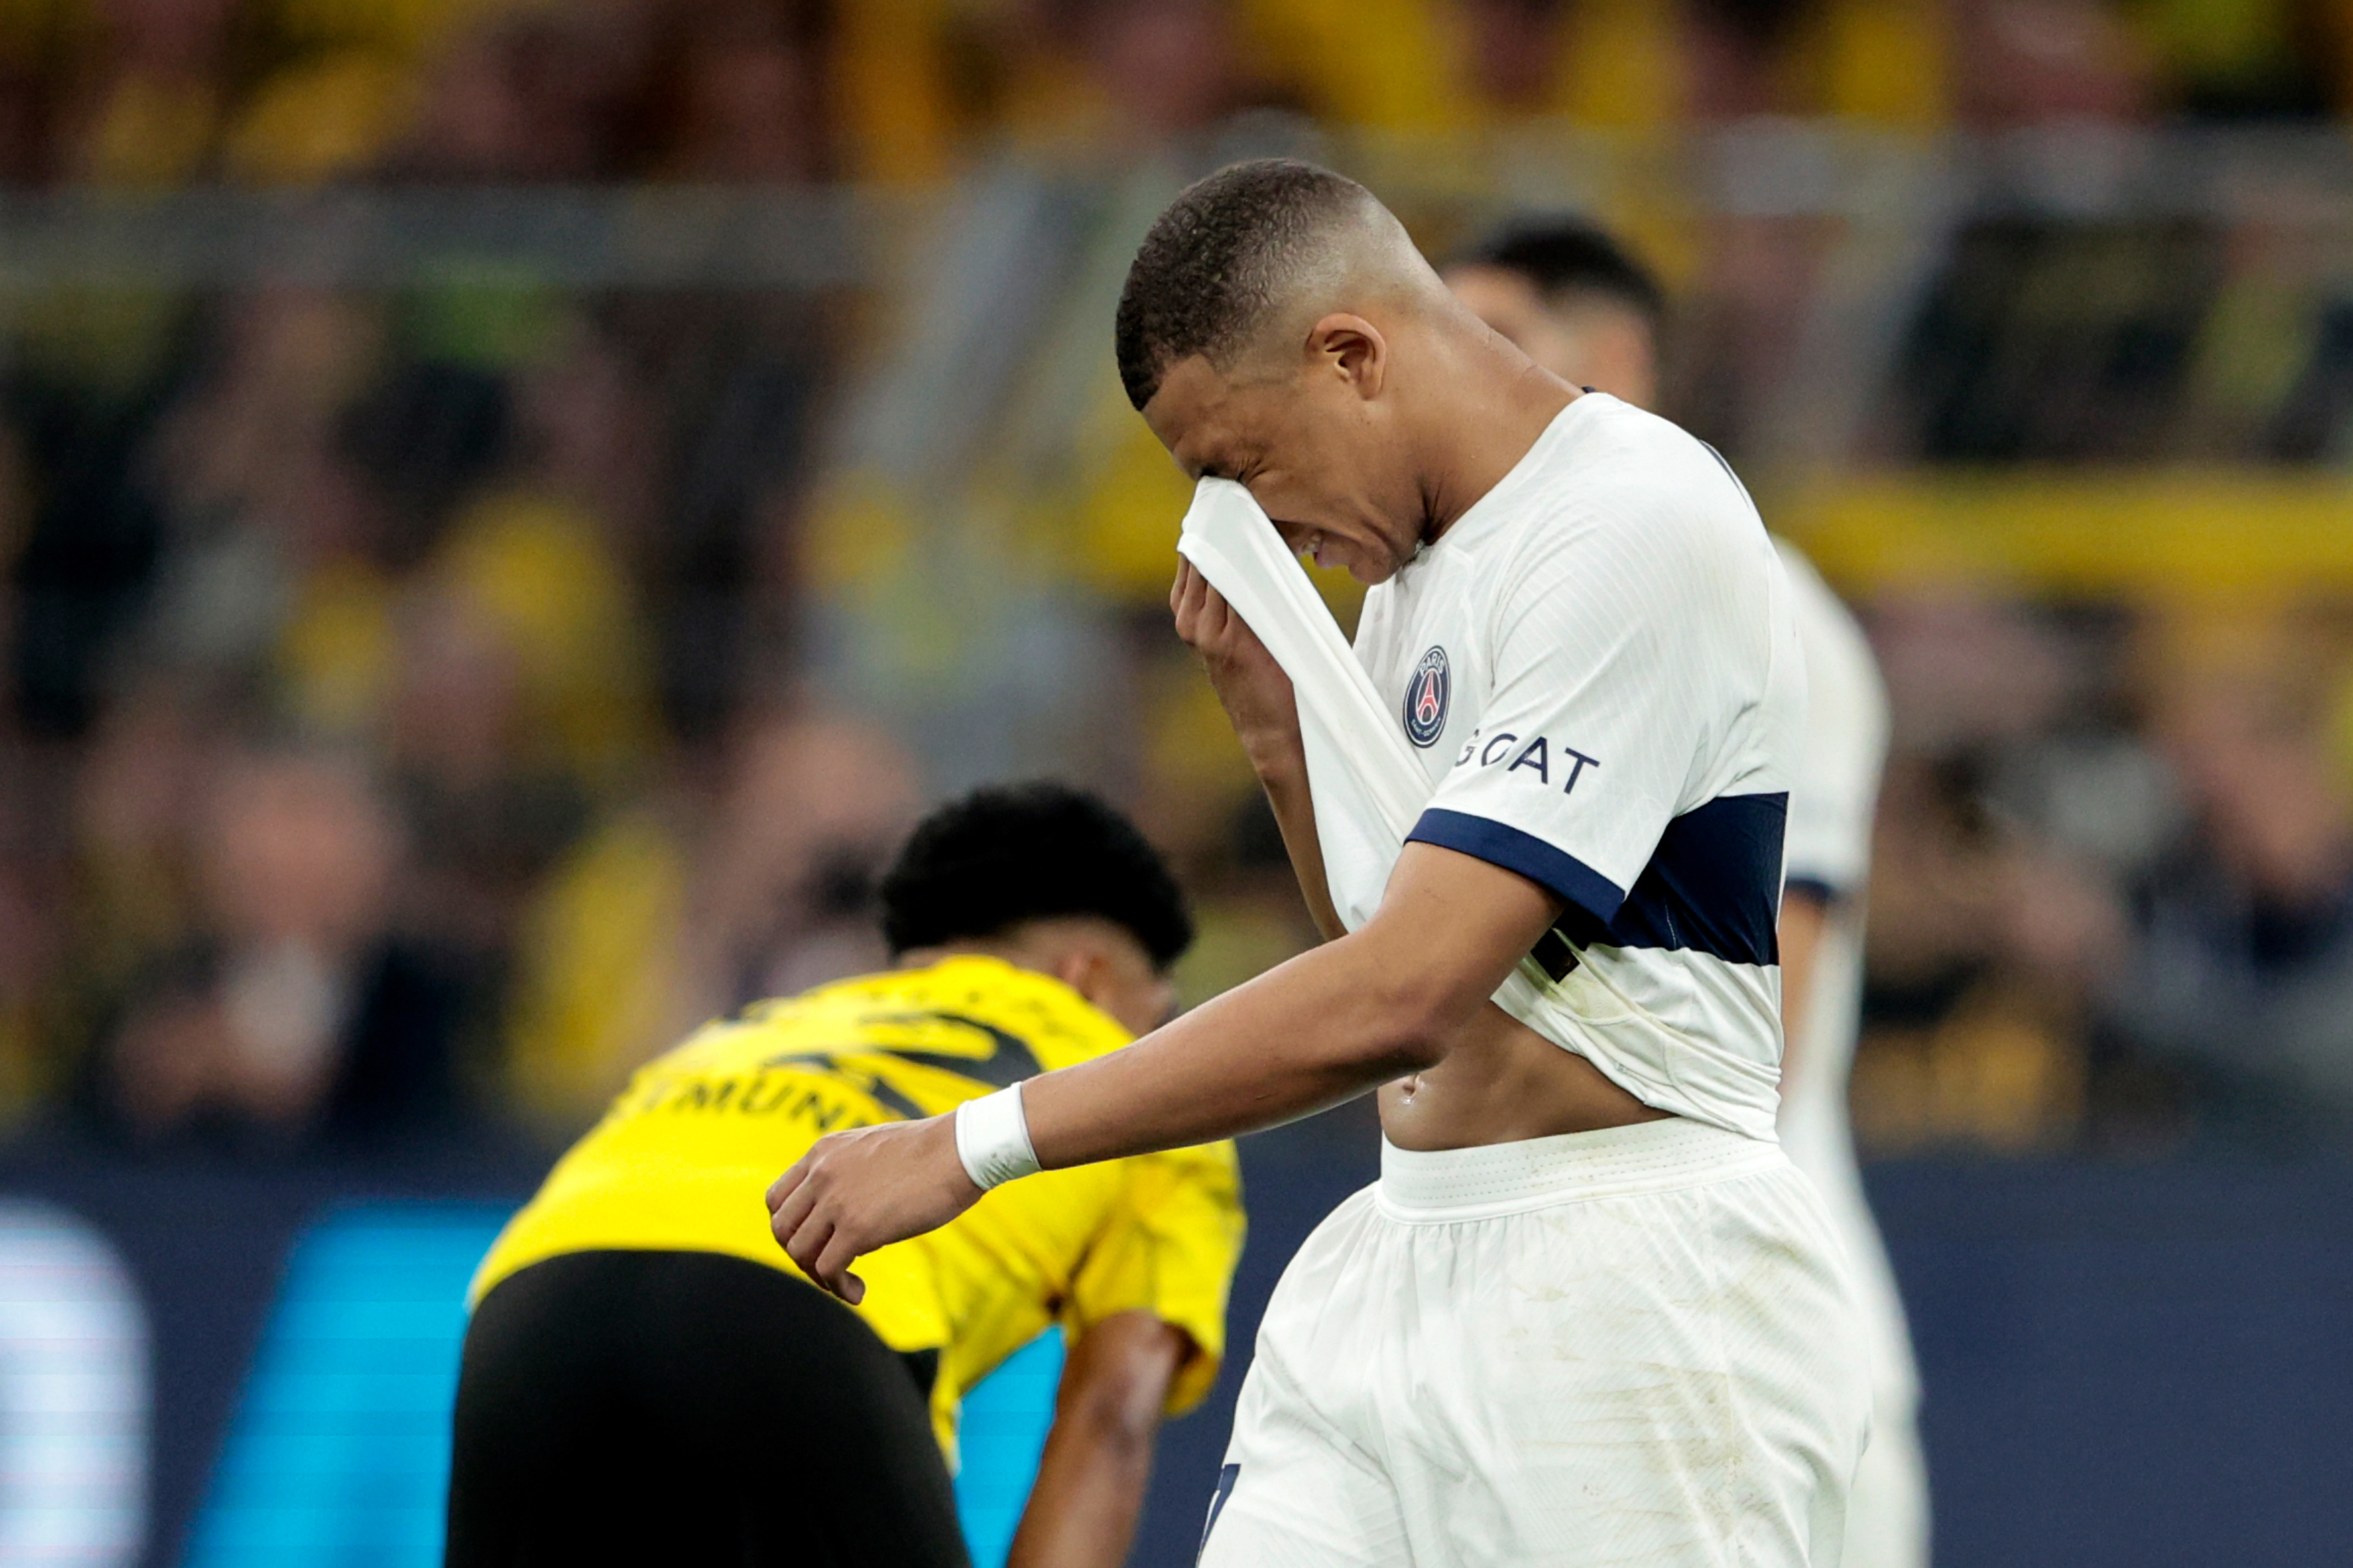 Kylian Mbappe of Paris Saint Germain disappointed during the UEFA Champions League match between Borussia Dortmund and Paris Saint Germain.